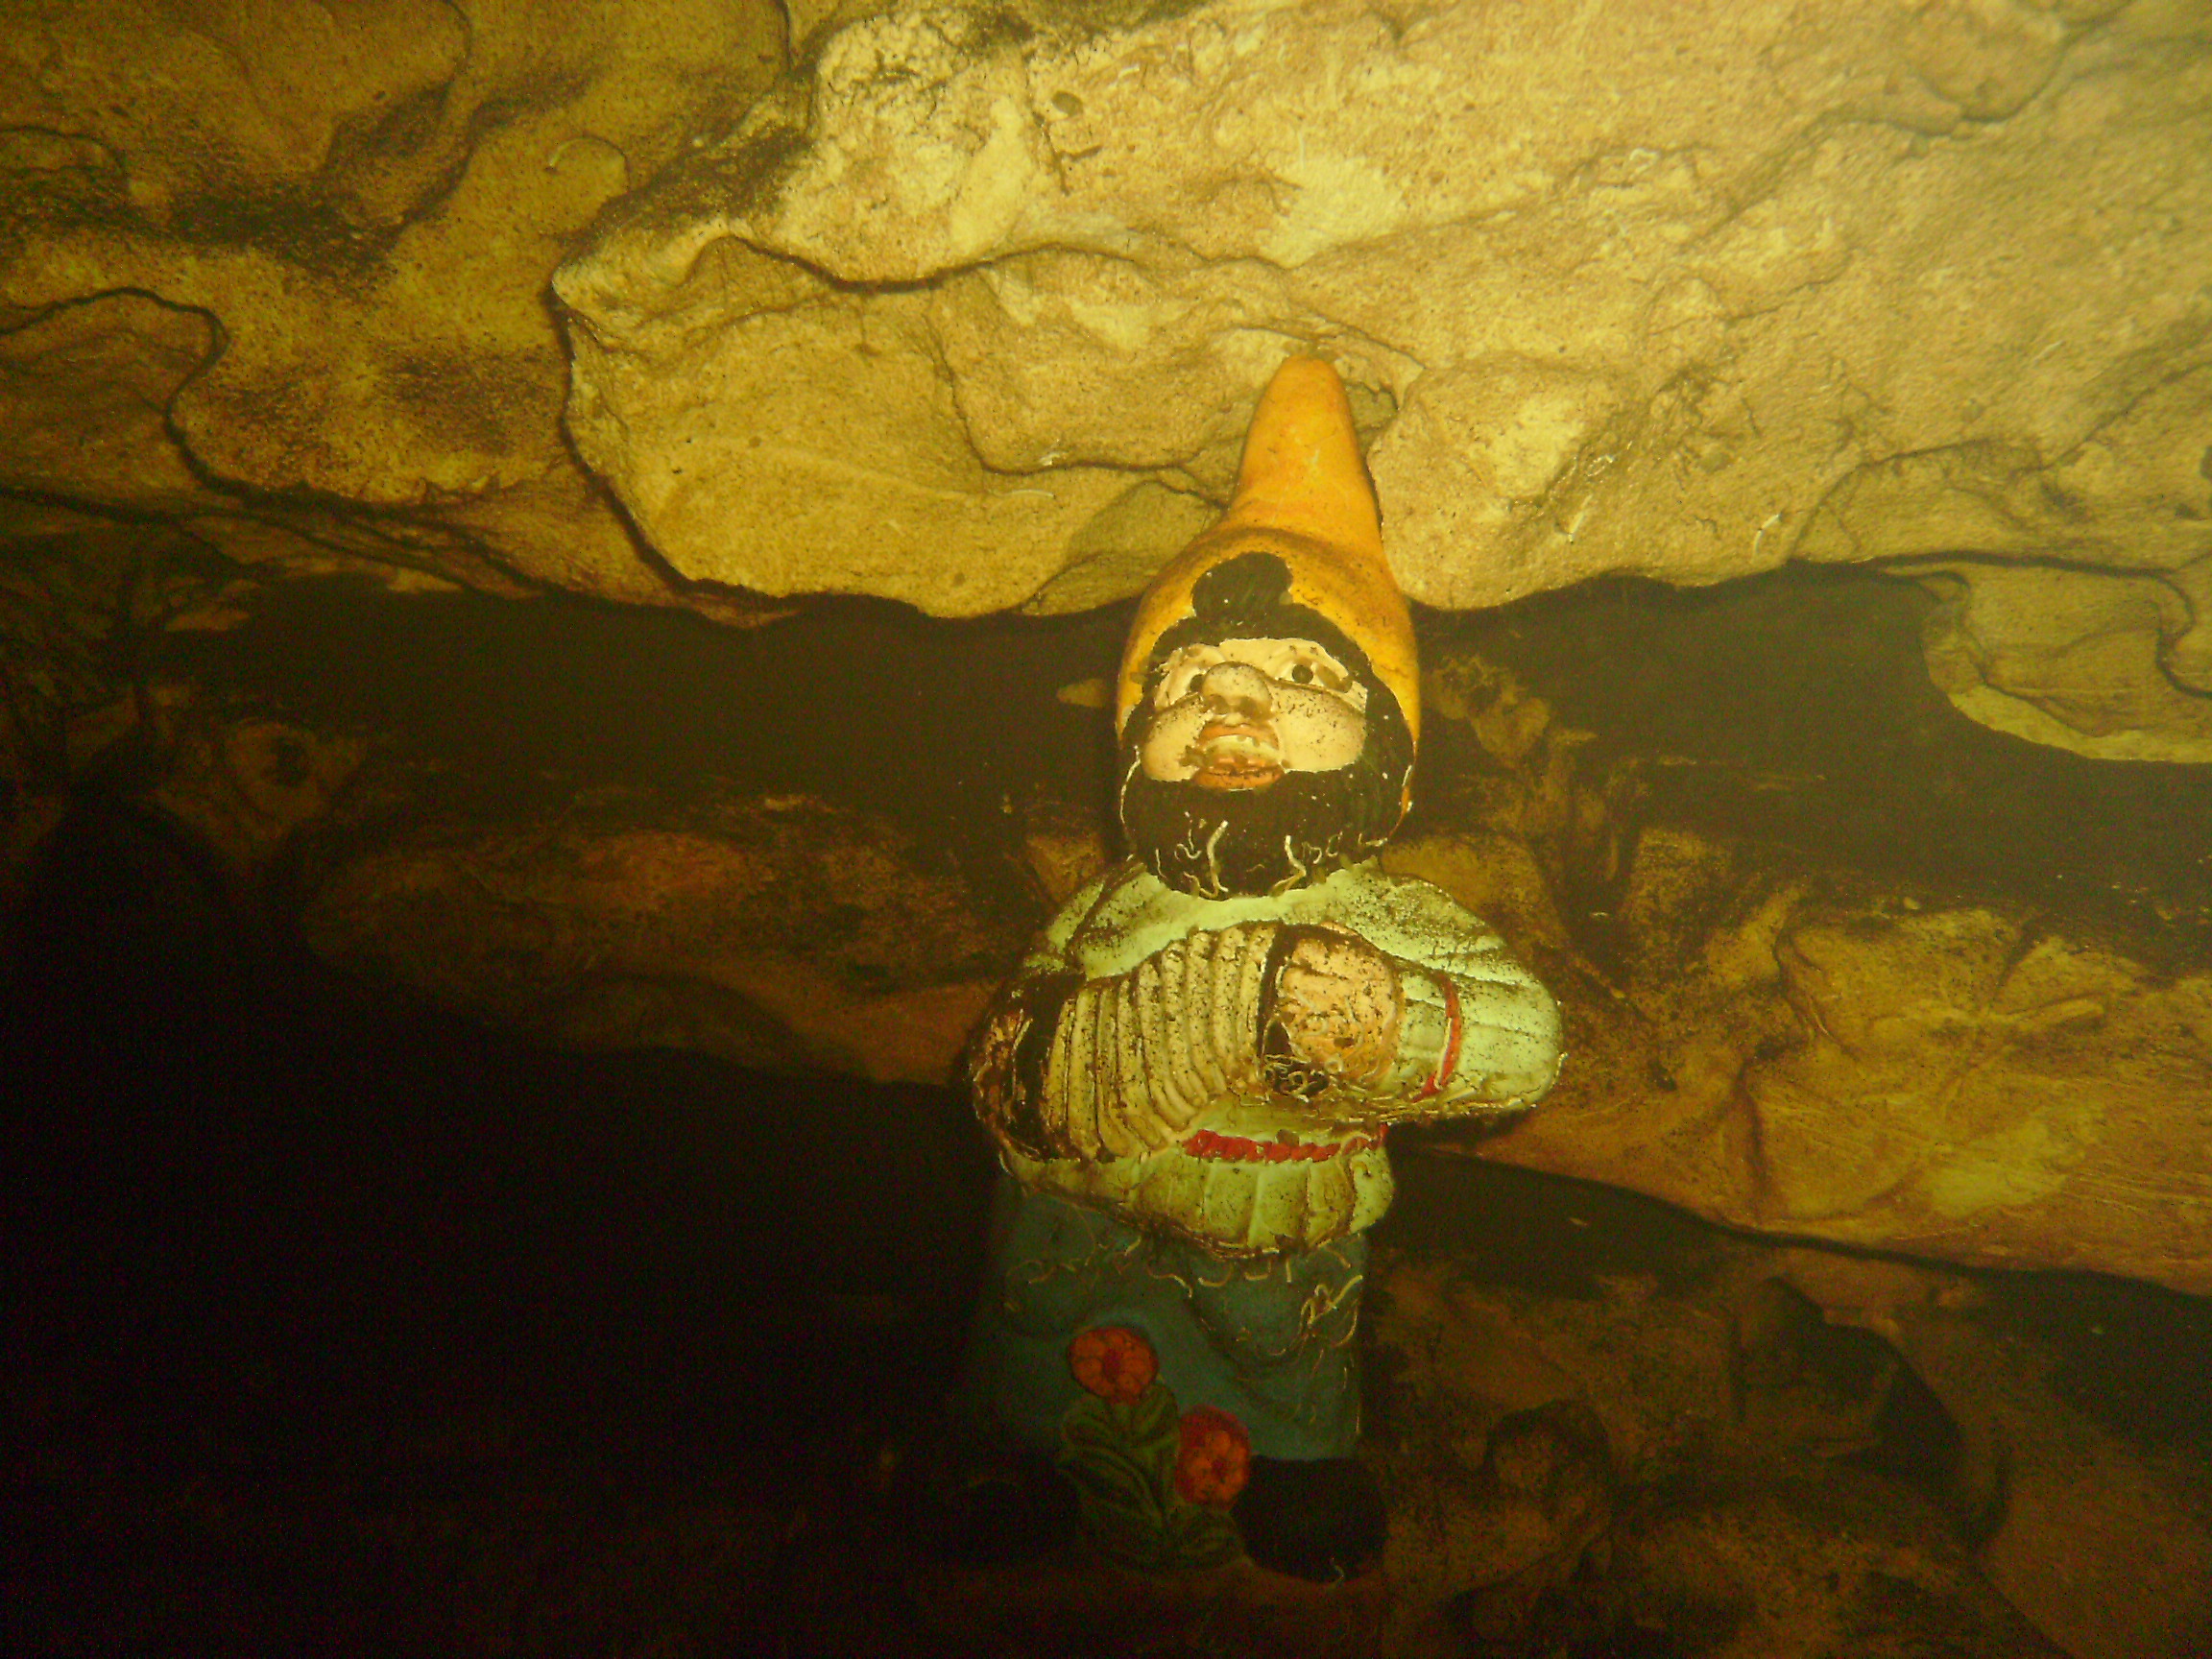 Travel Gnome?